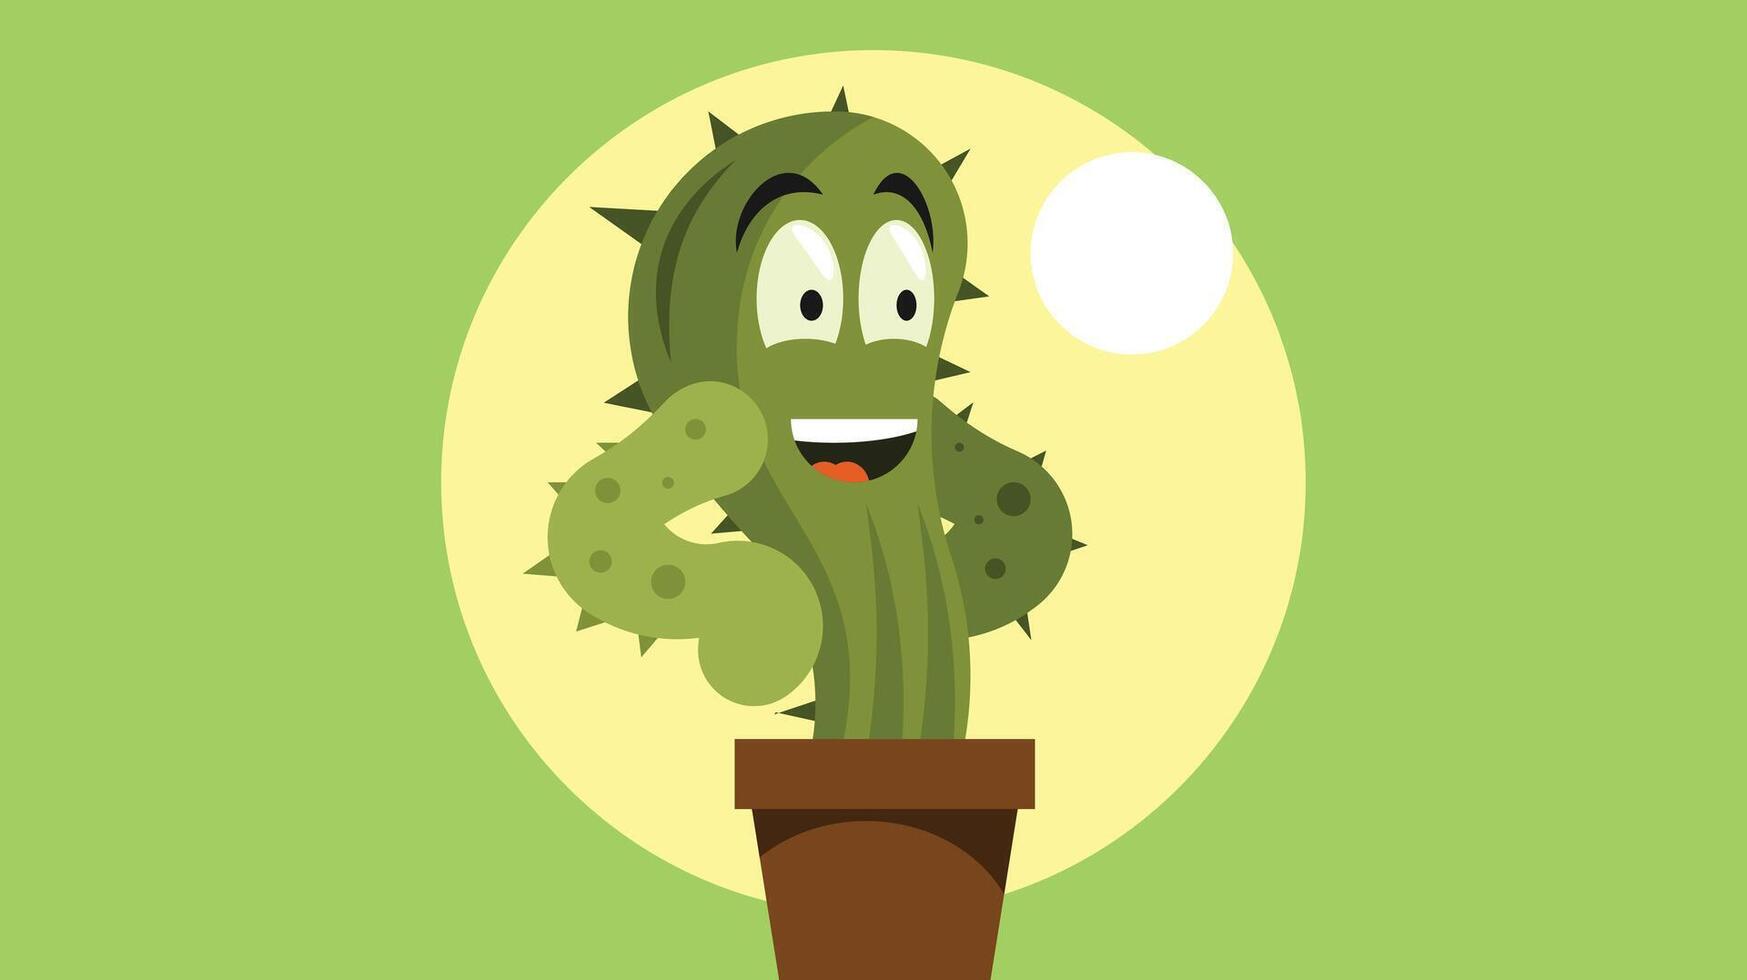 Cactus plant cartoon children book character vector illustration